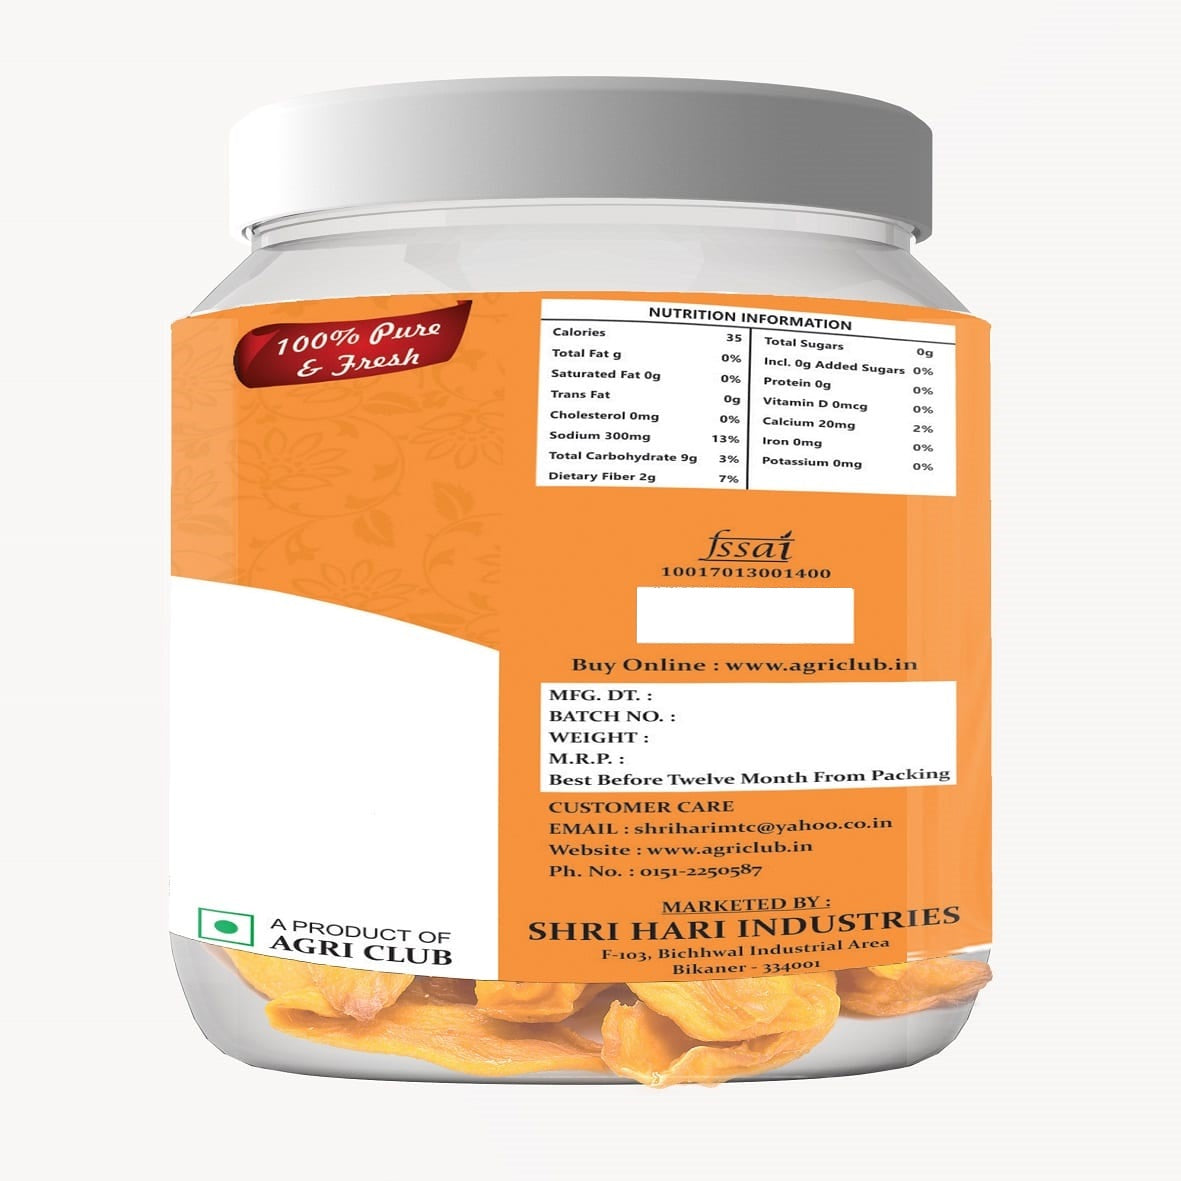 Dry Mango Whole 100% Premium Quality